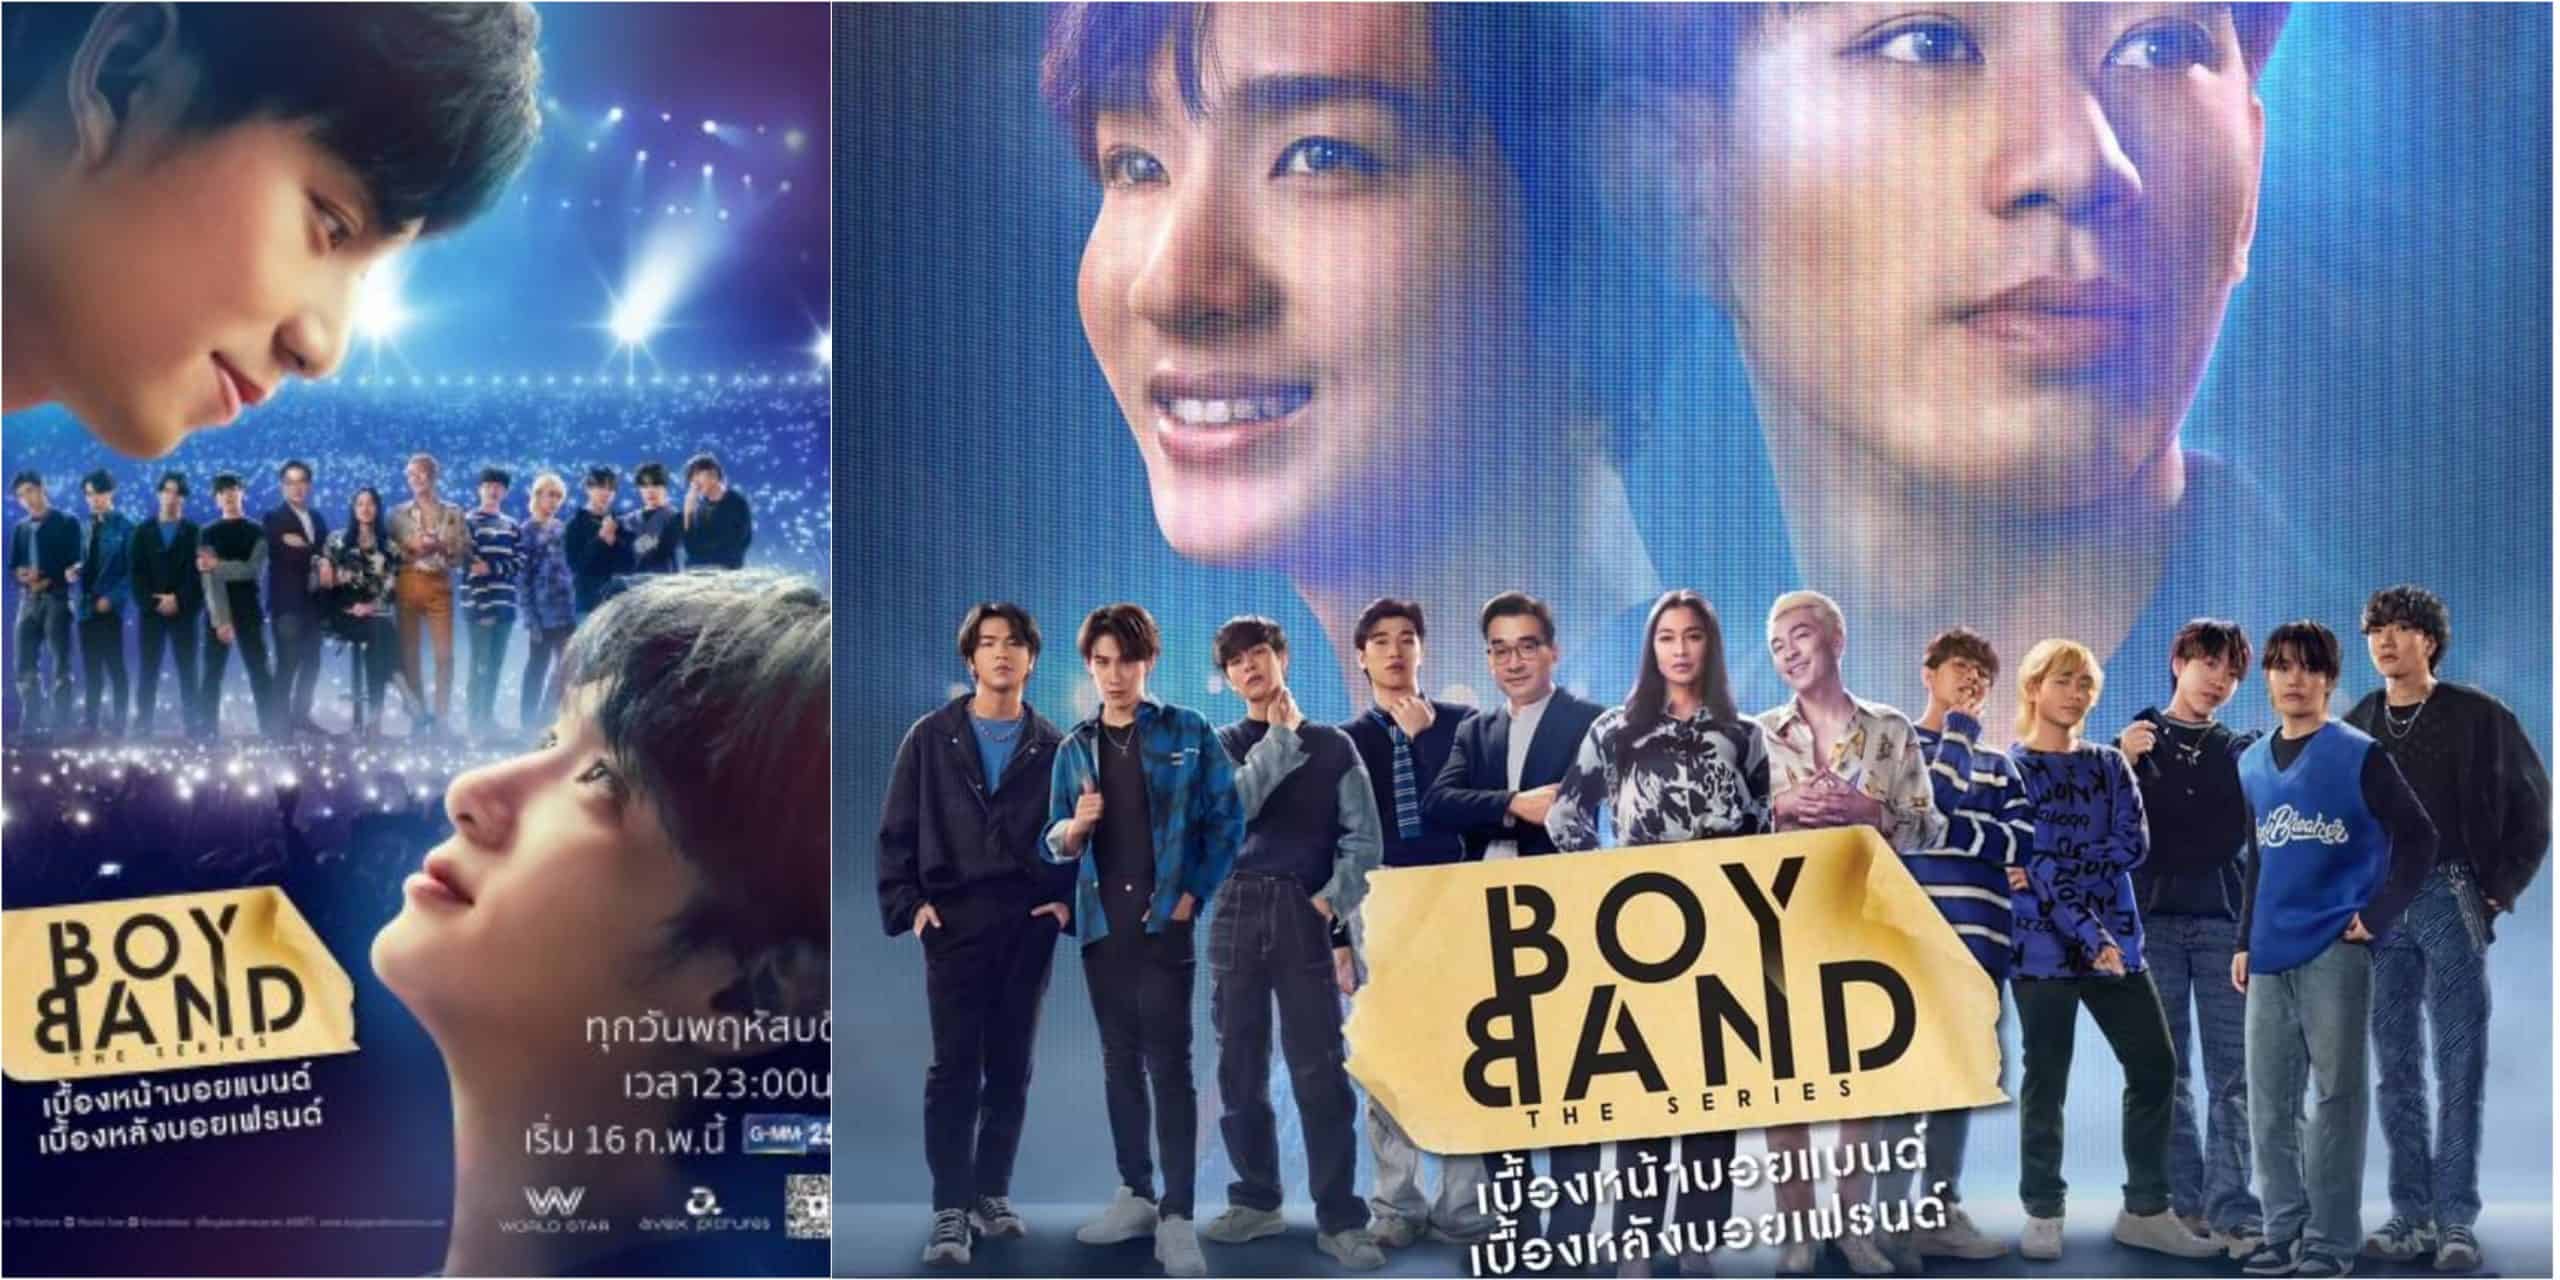 Boyband Thai BL Series Episode 6 Release Date